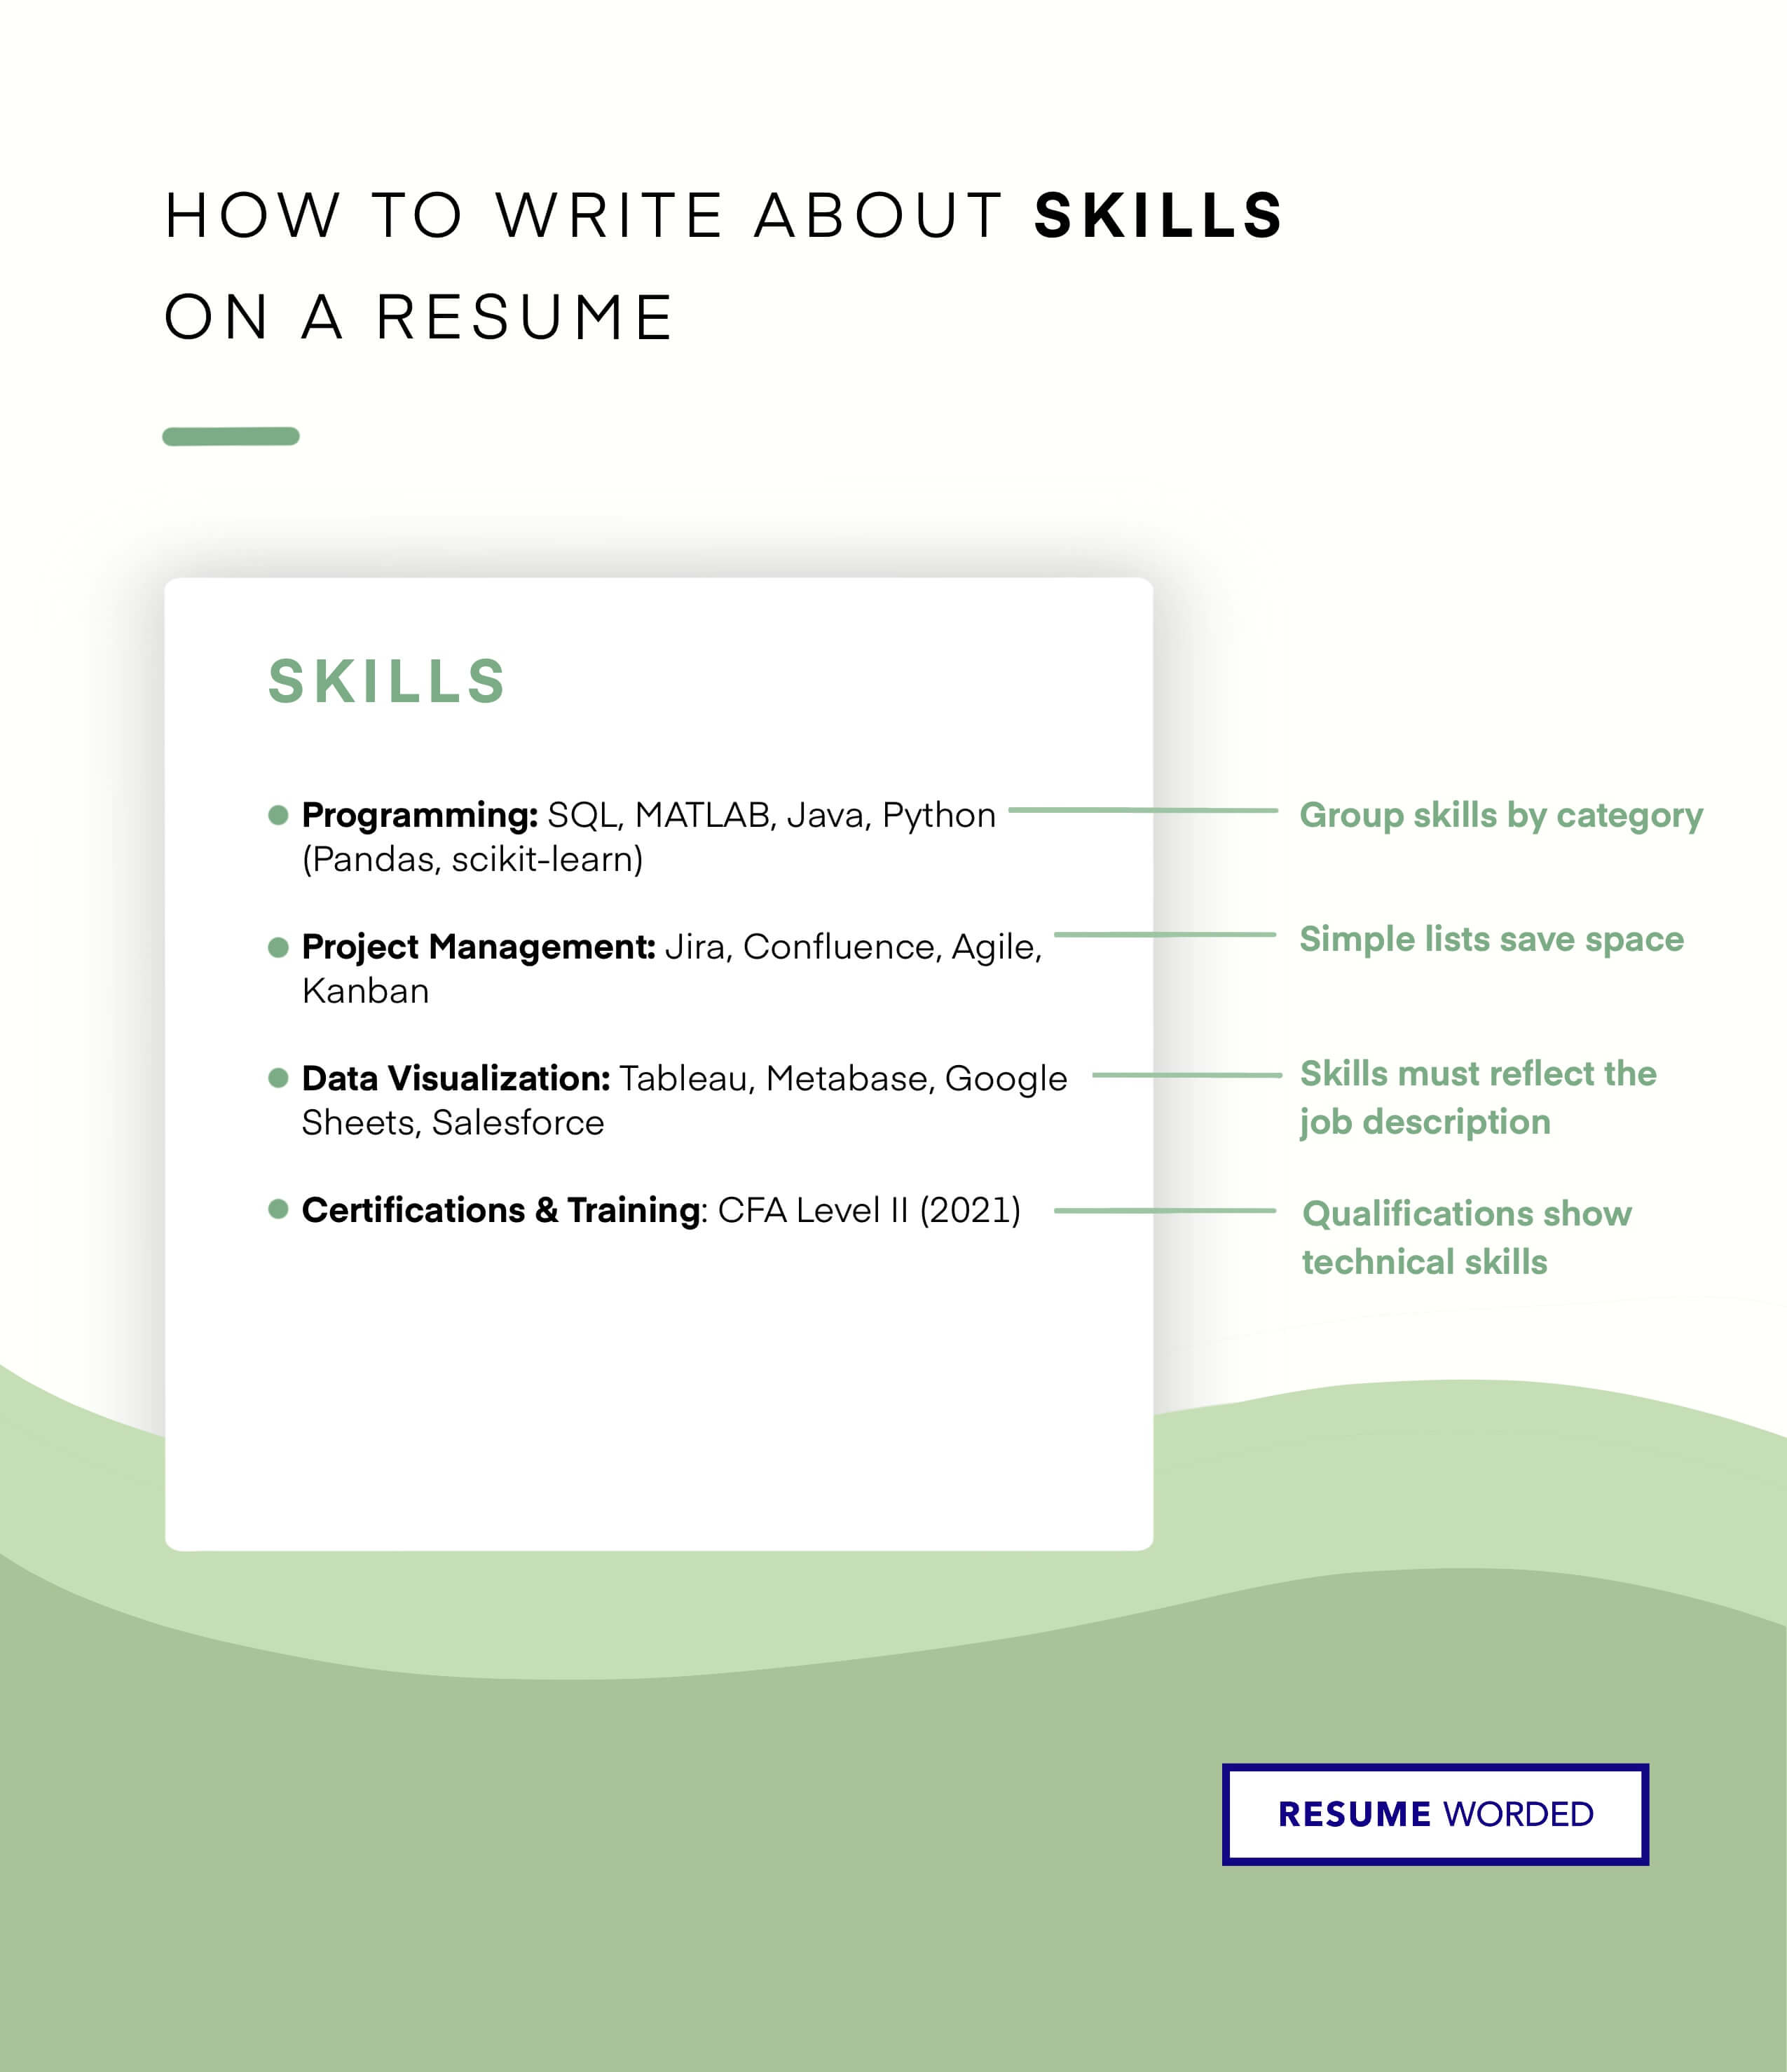 Showcase your people skills - Entry-Level Recruiter Resume